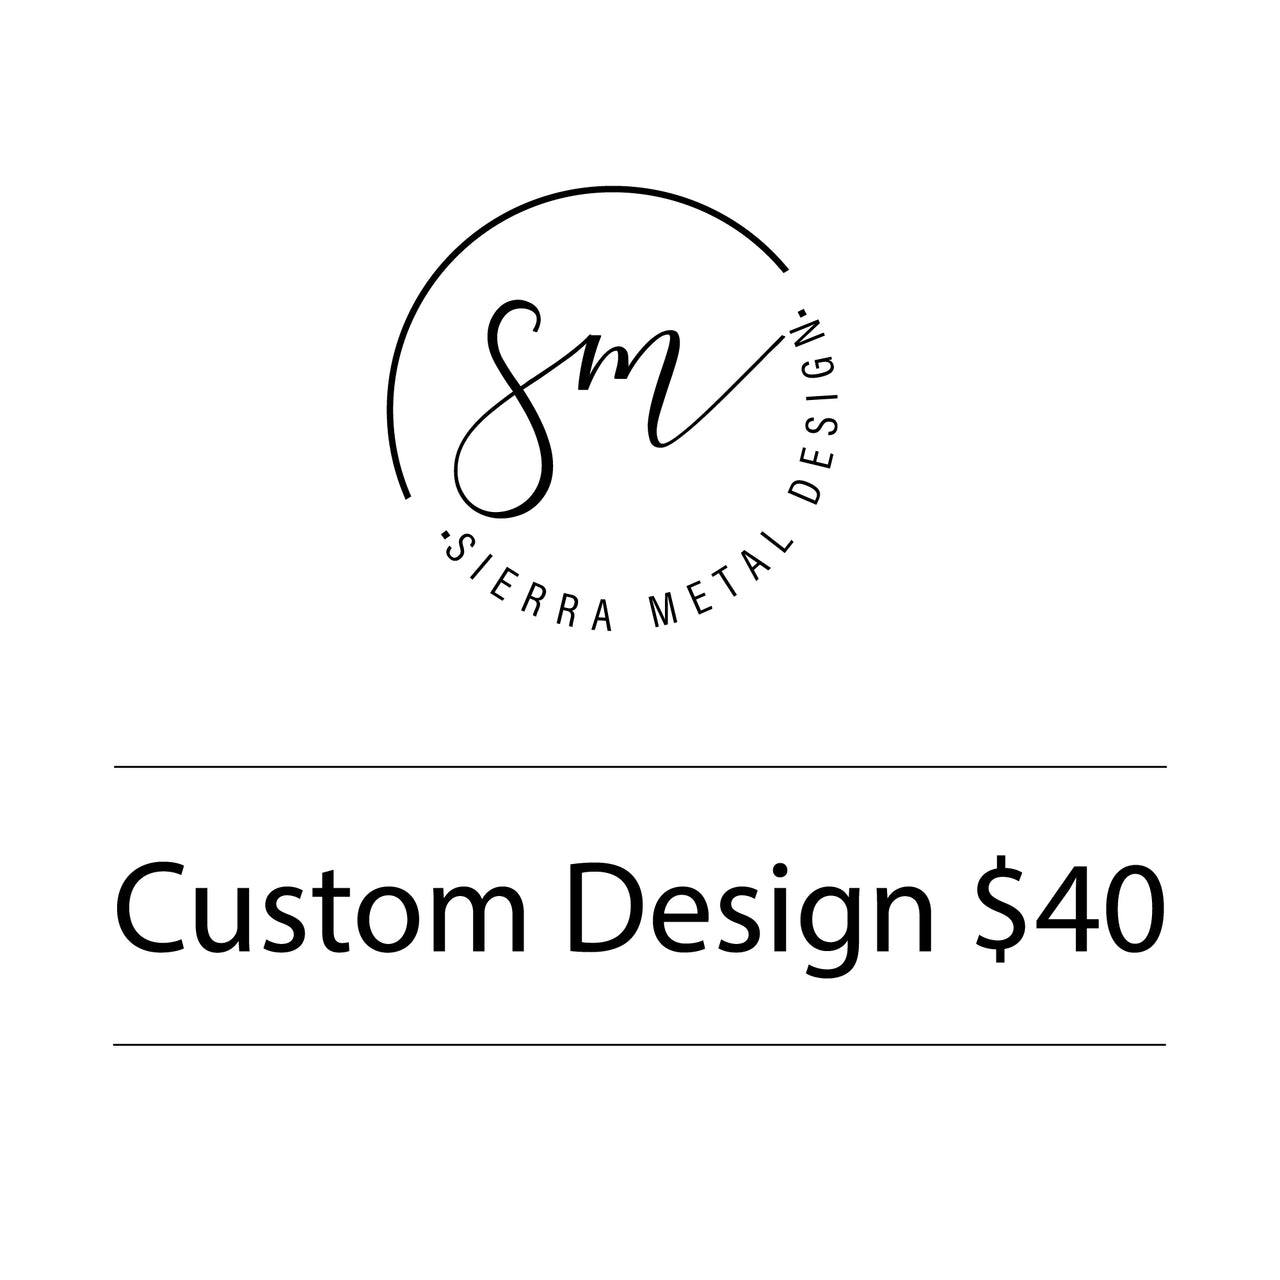 Custom Design $40